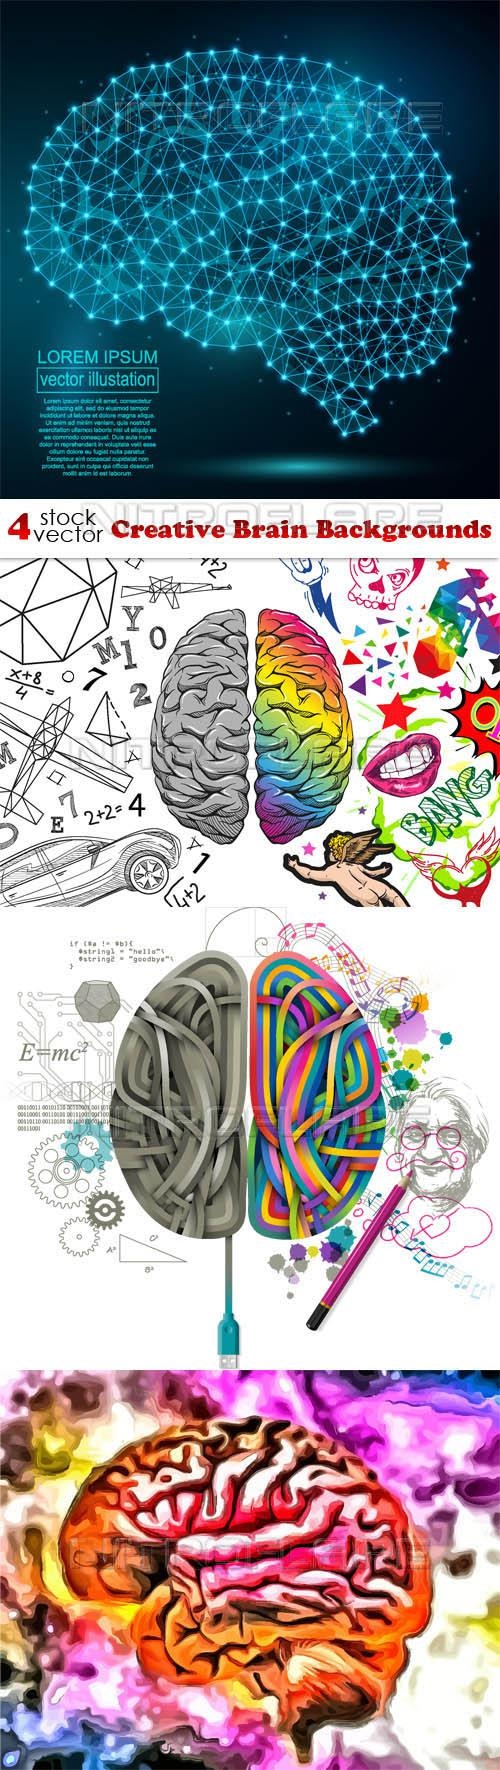 Creative Brain Backgrounds ((aitff (8 files)